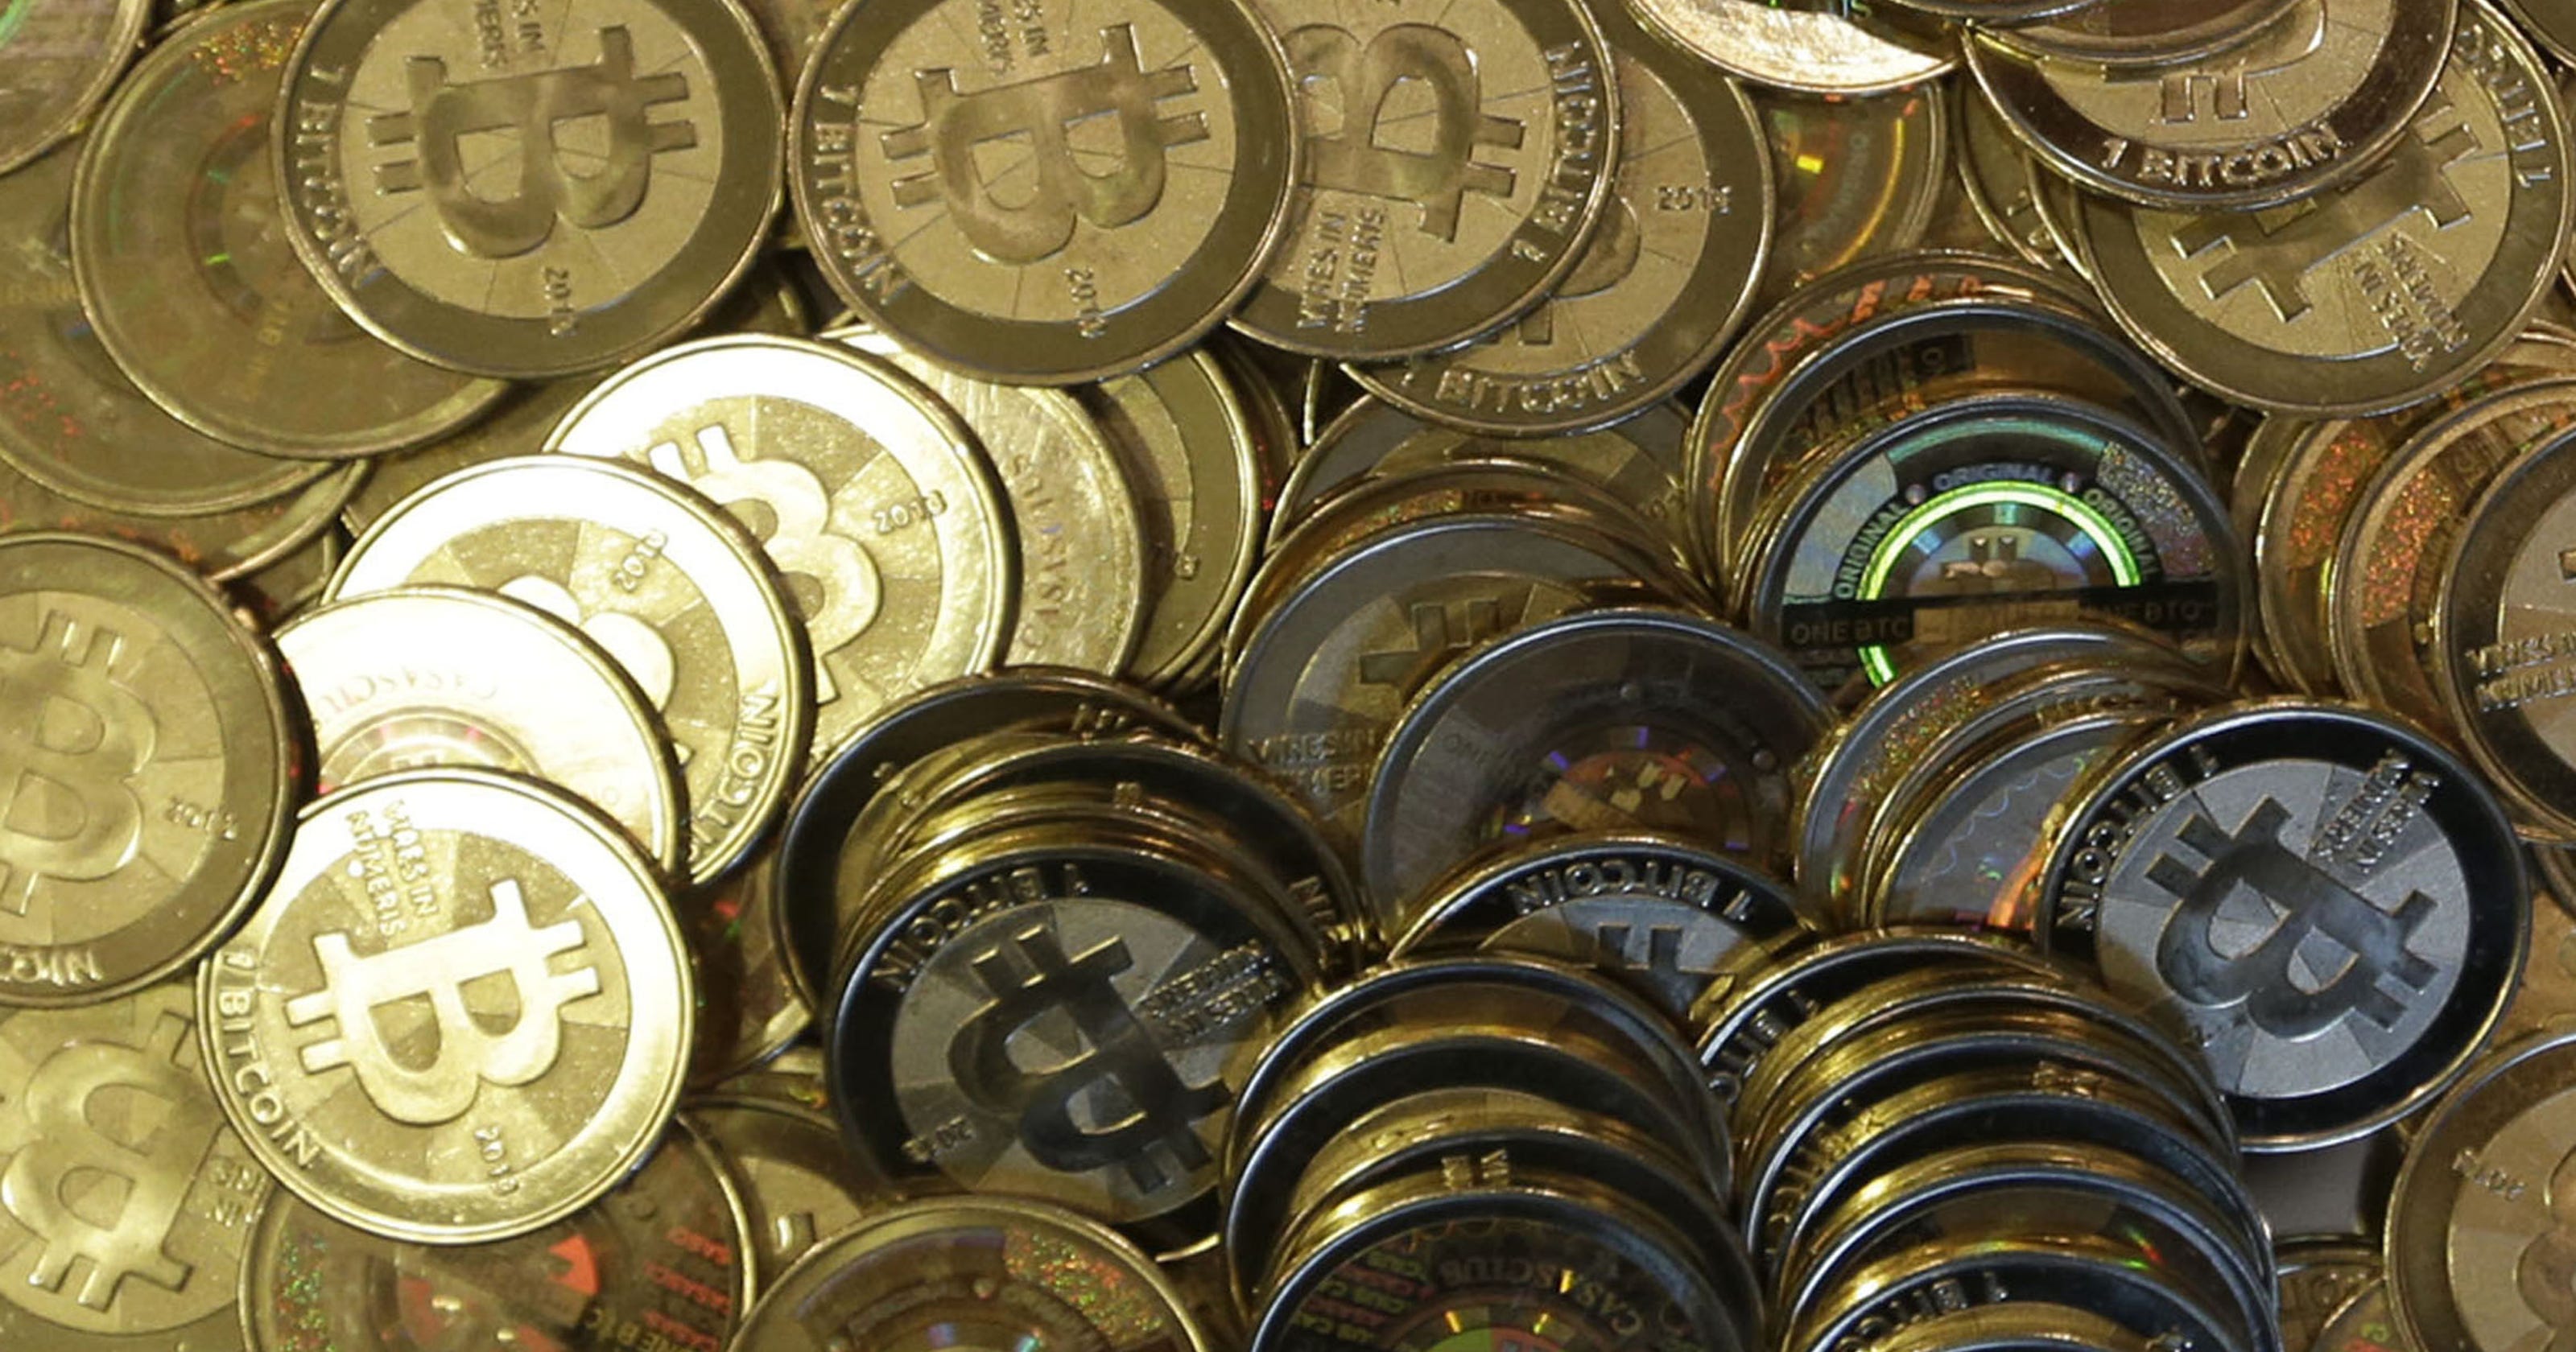 Ask Matt: Should I invest in Bitcoin?